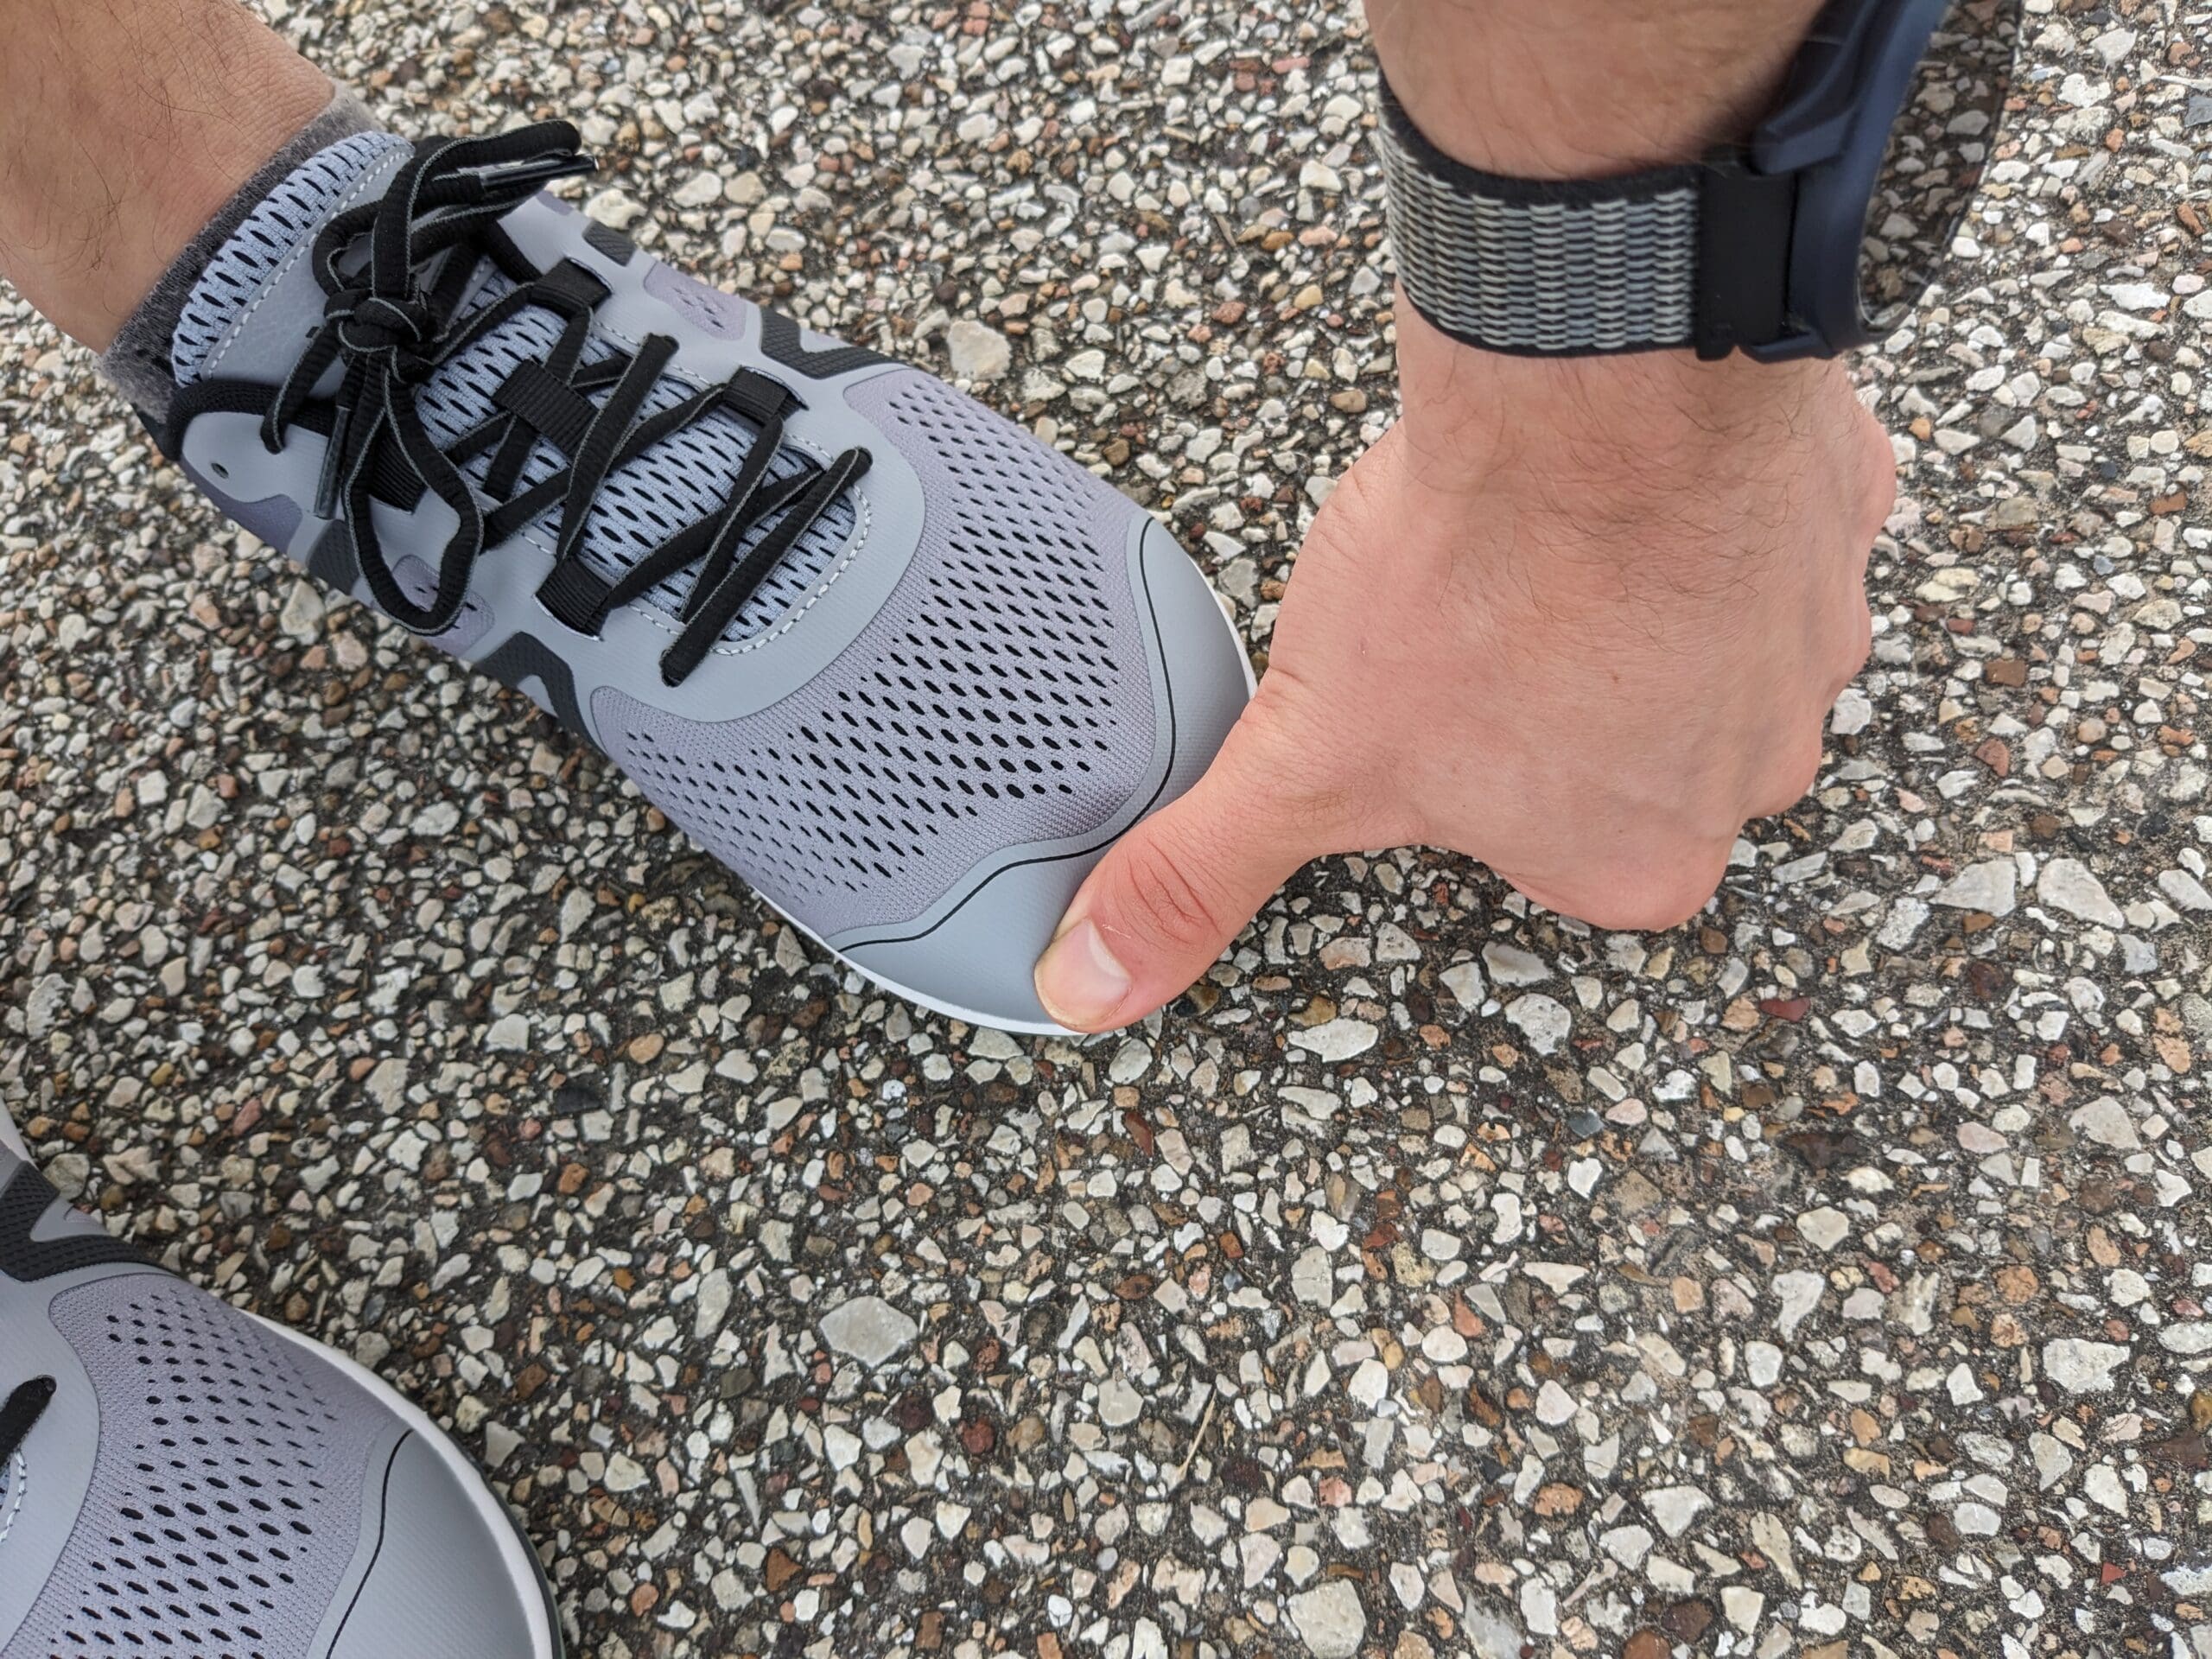 Xero Shoes toe fit